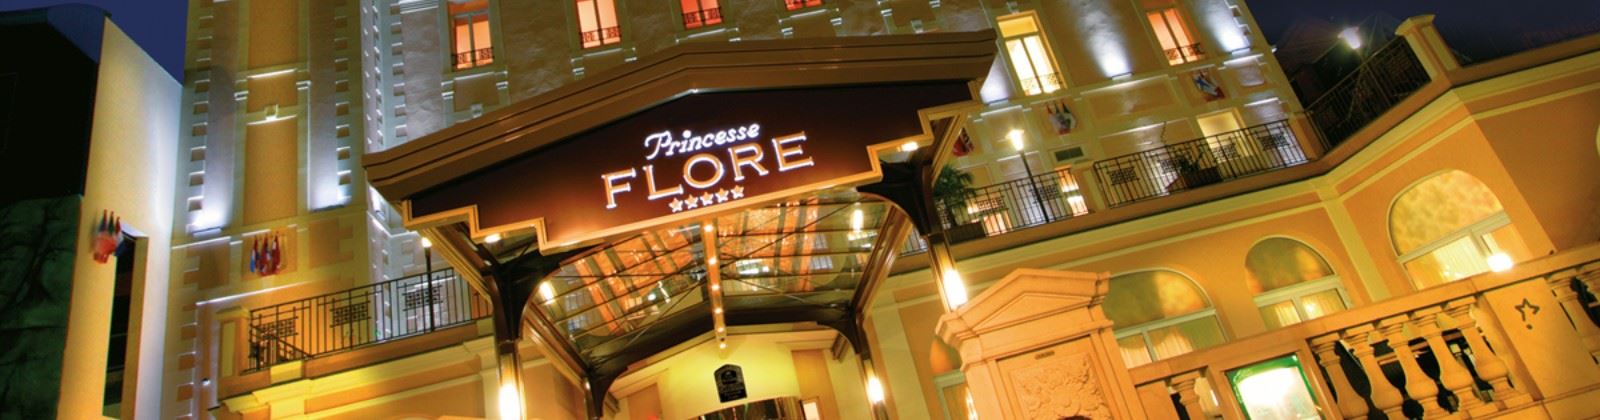 OLEVENE image - hotel-princesse-flore-olevene-restaurant-events-